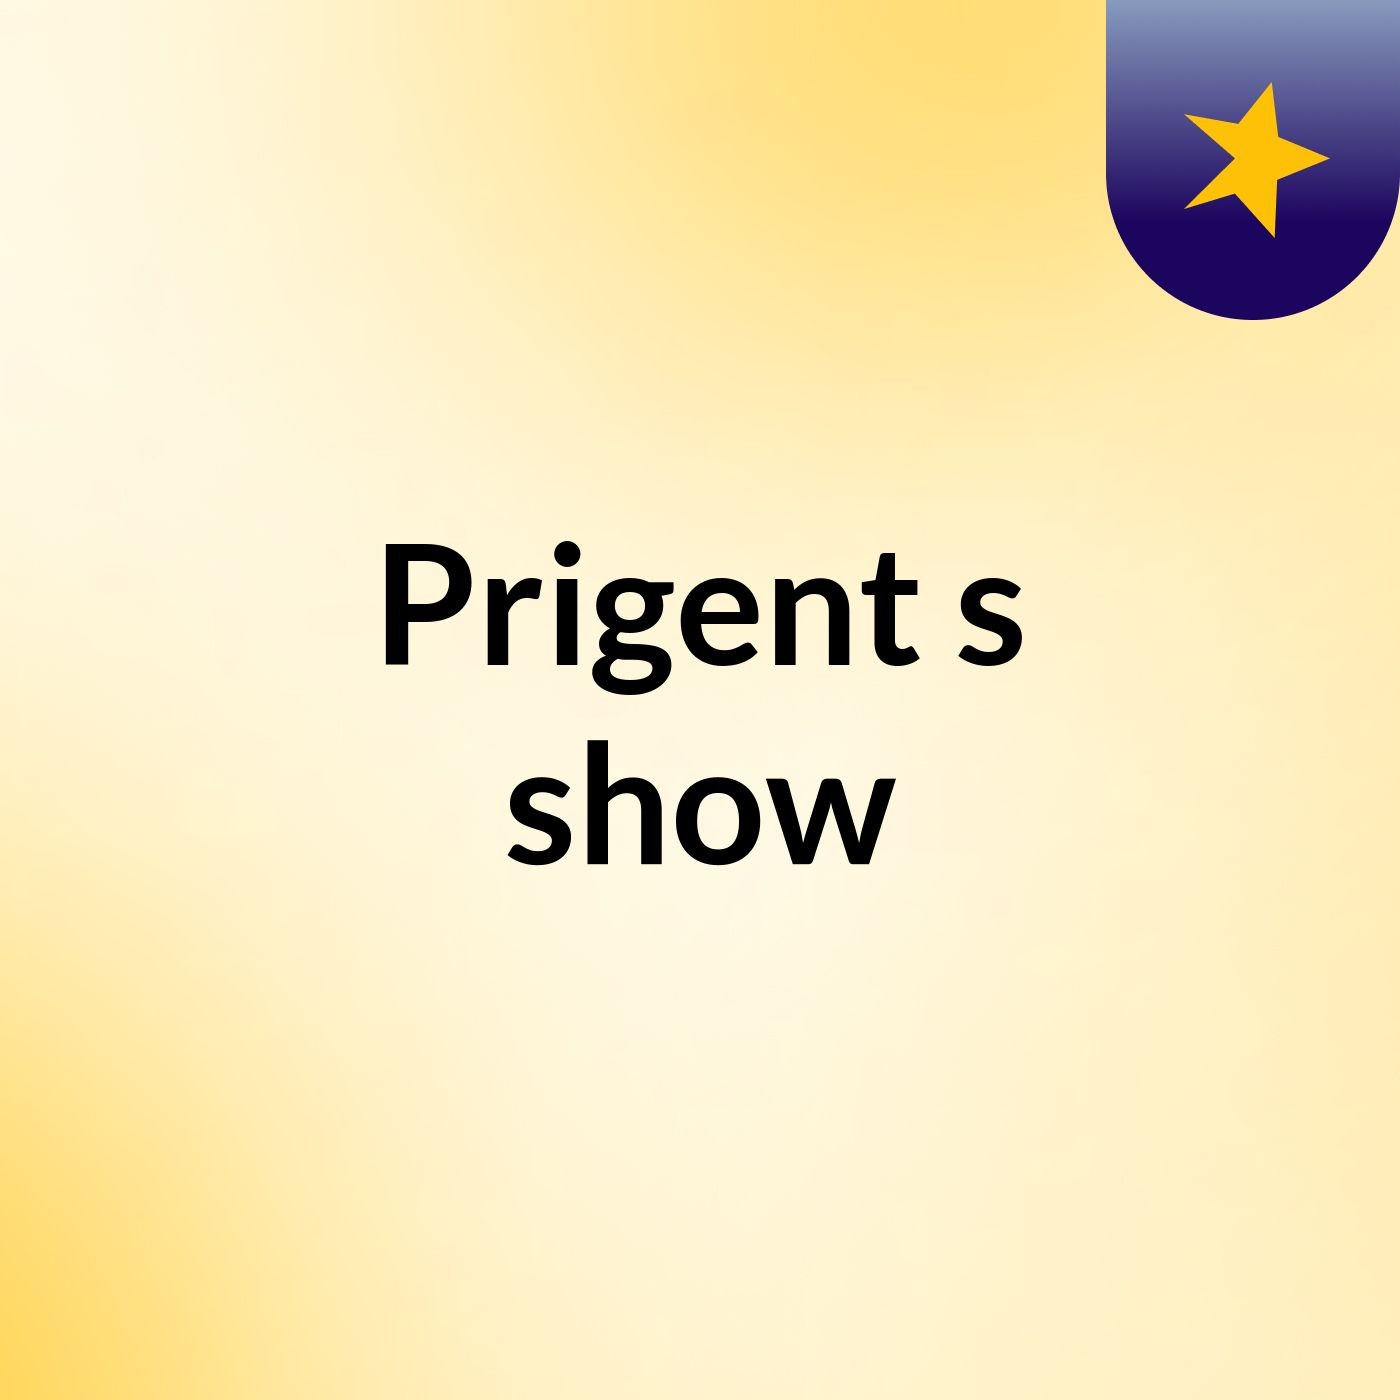 Prigent's show